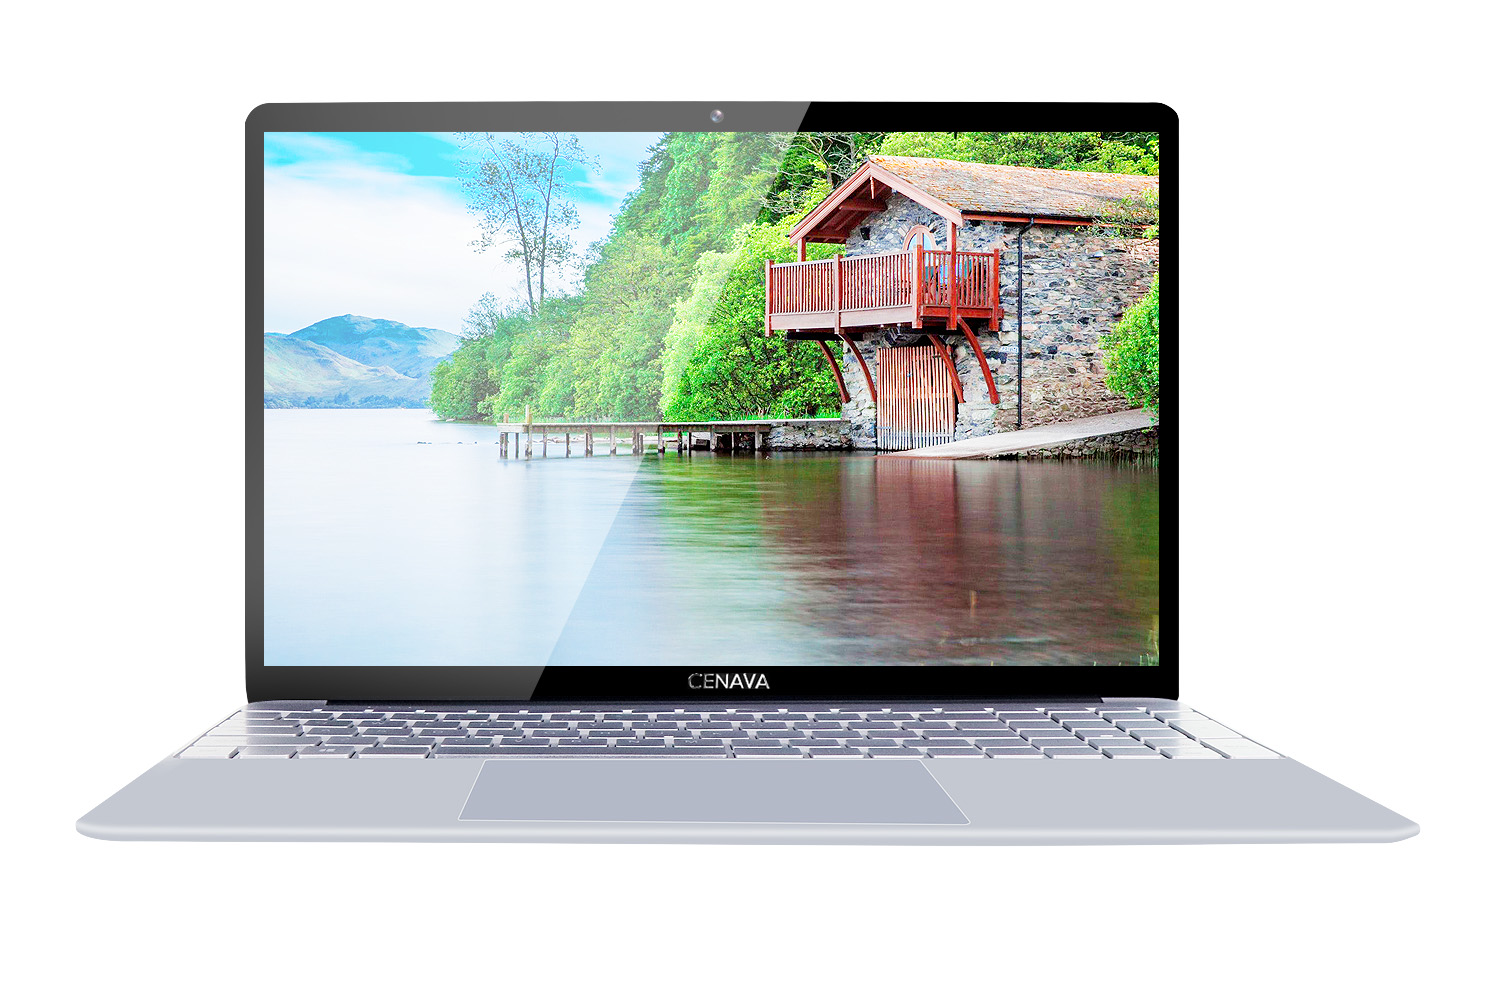 

CENAVA F151 Laptop 15.6 inch Intel Core J3455 Intel HD Graphics 500 Win10 8G RAM 128GB SSD Notebook TN Screen